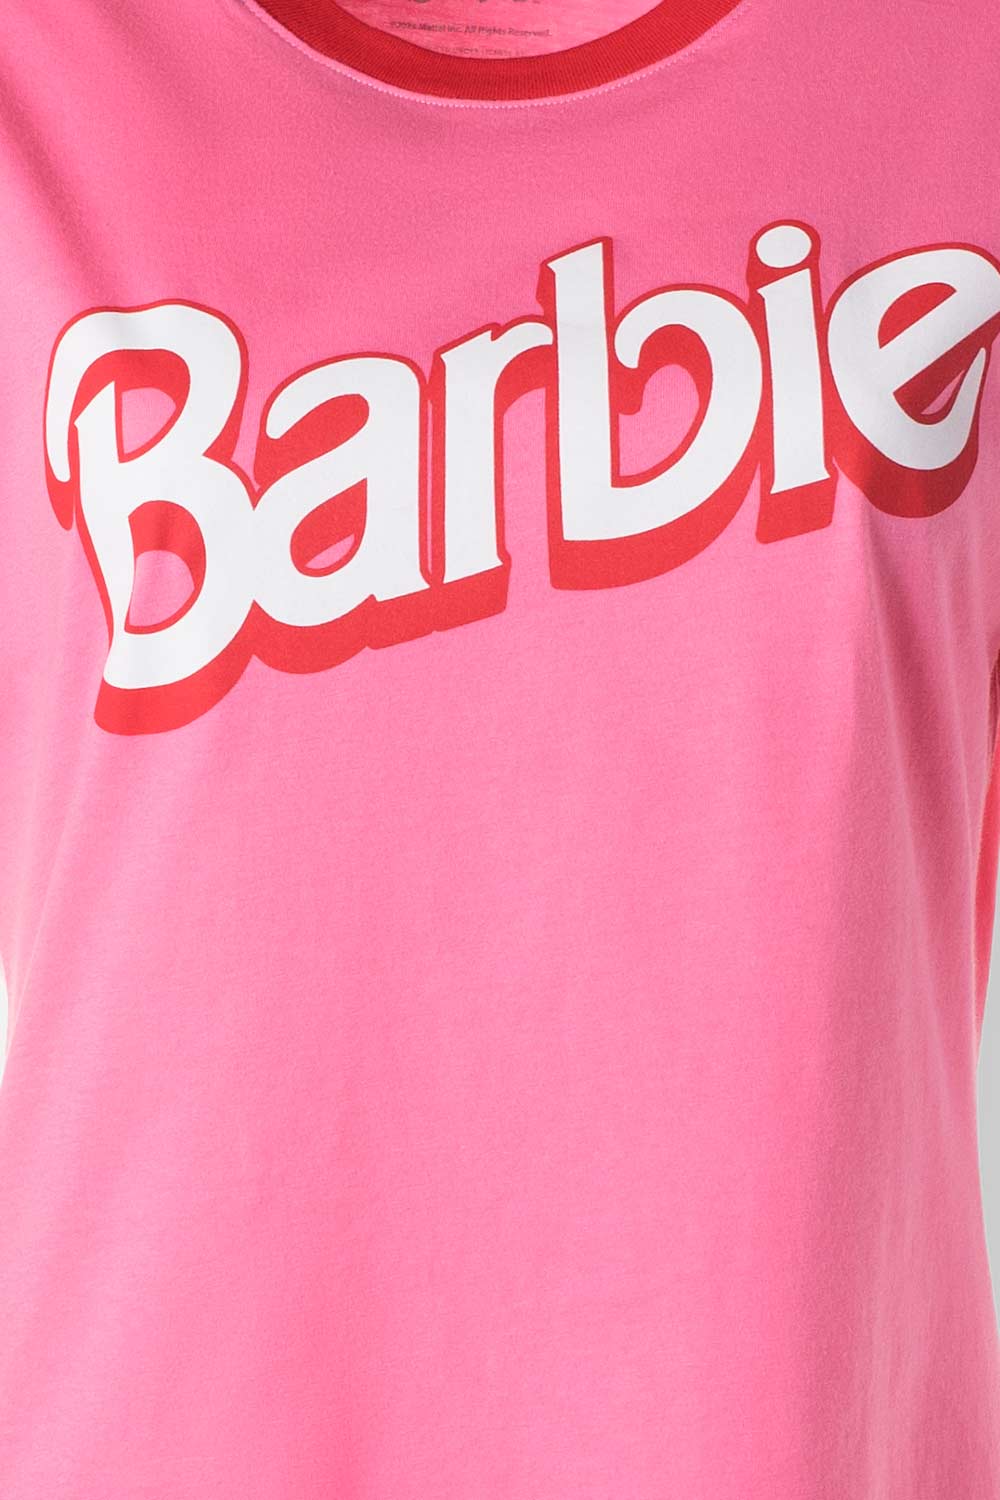 Camiseta de Barbie rosada manga corta para mujer - MoviesShop